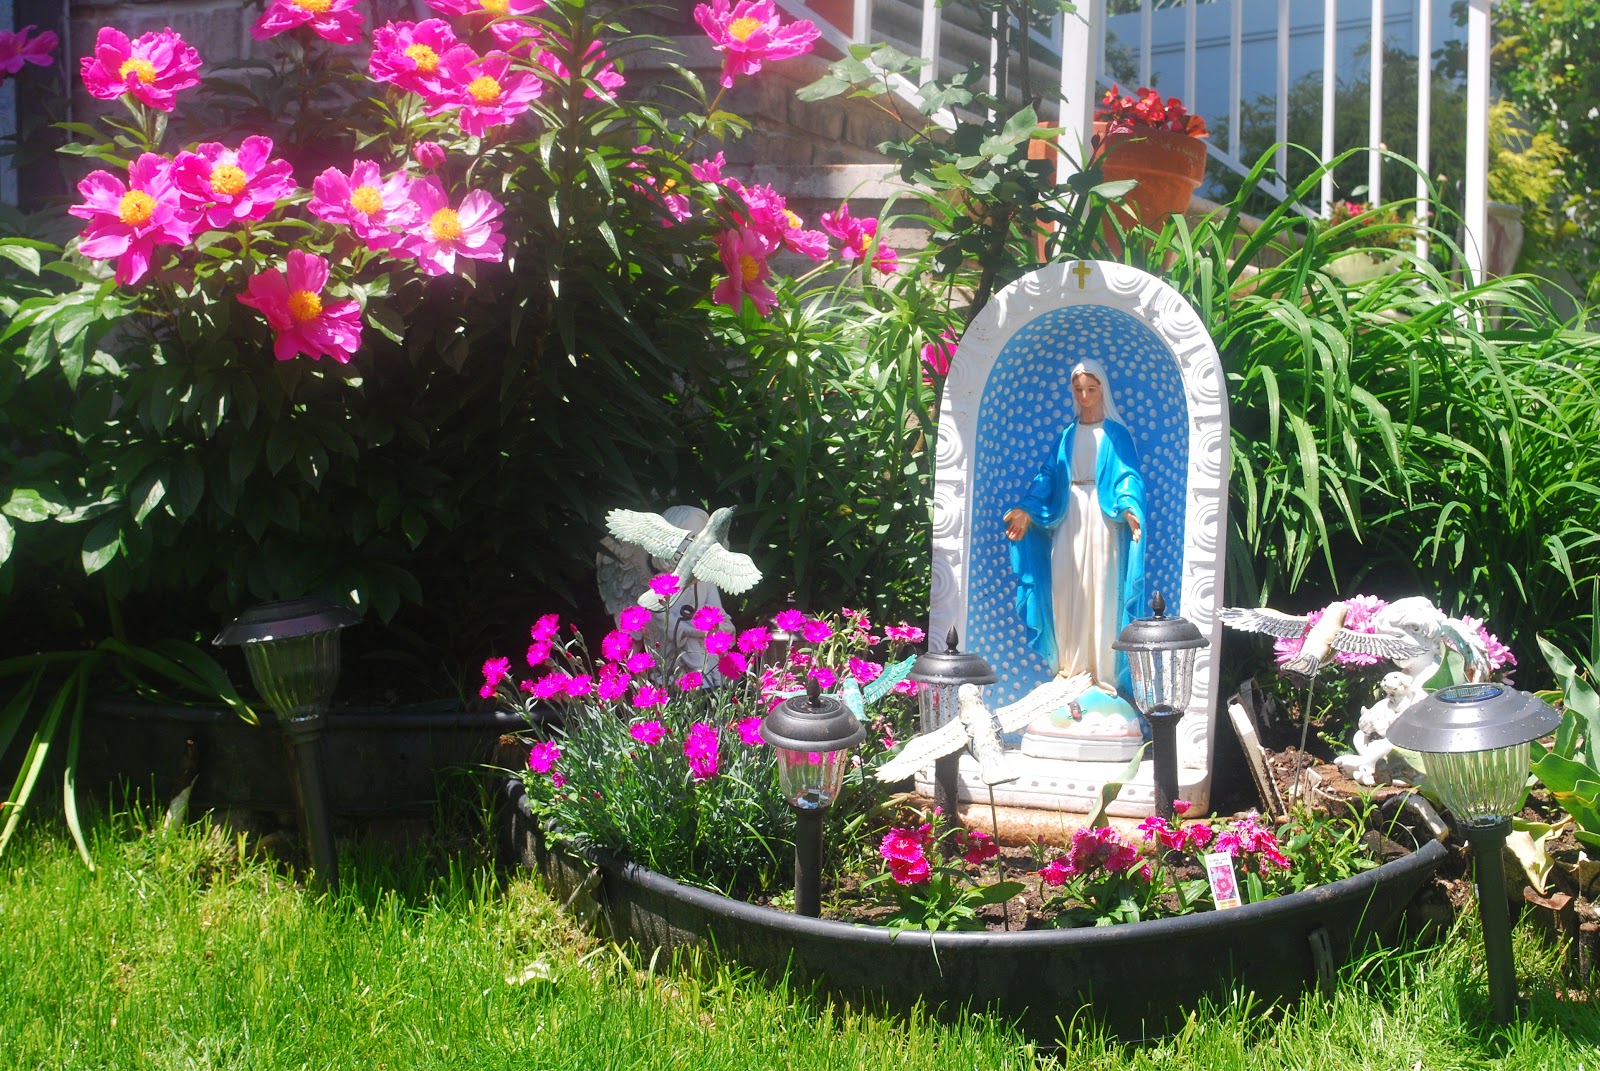 Your Mary Garden